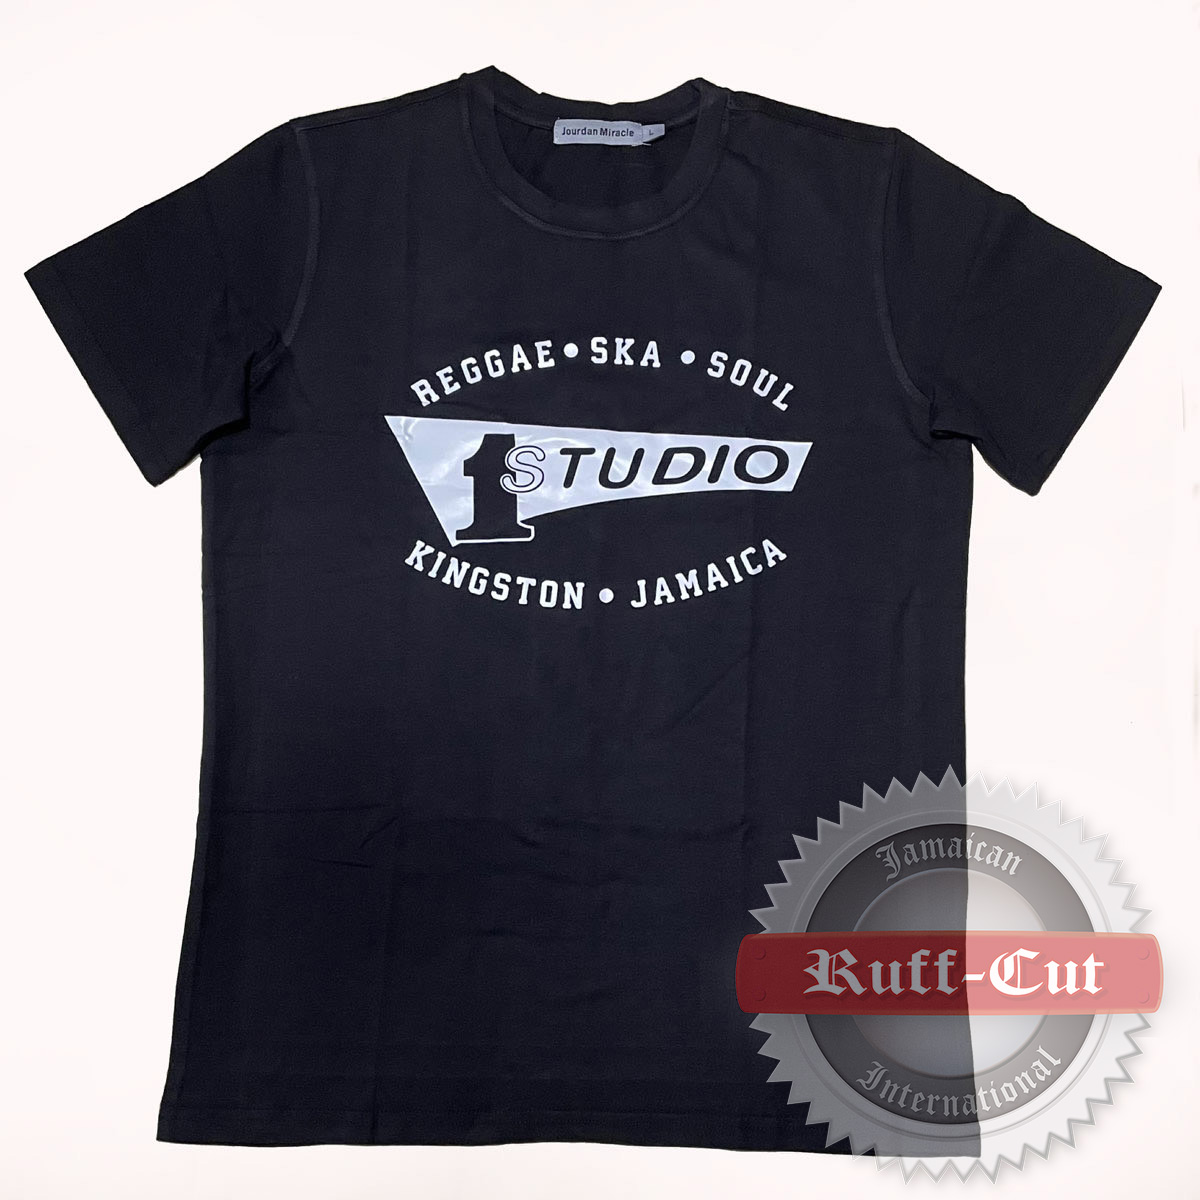 【T-SHIRTS】レゲエTシャツ -STUDIO 1- Kingston Jamaica